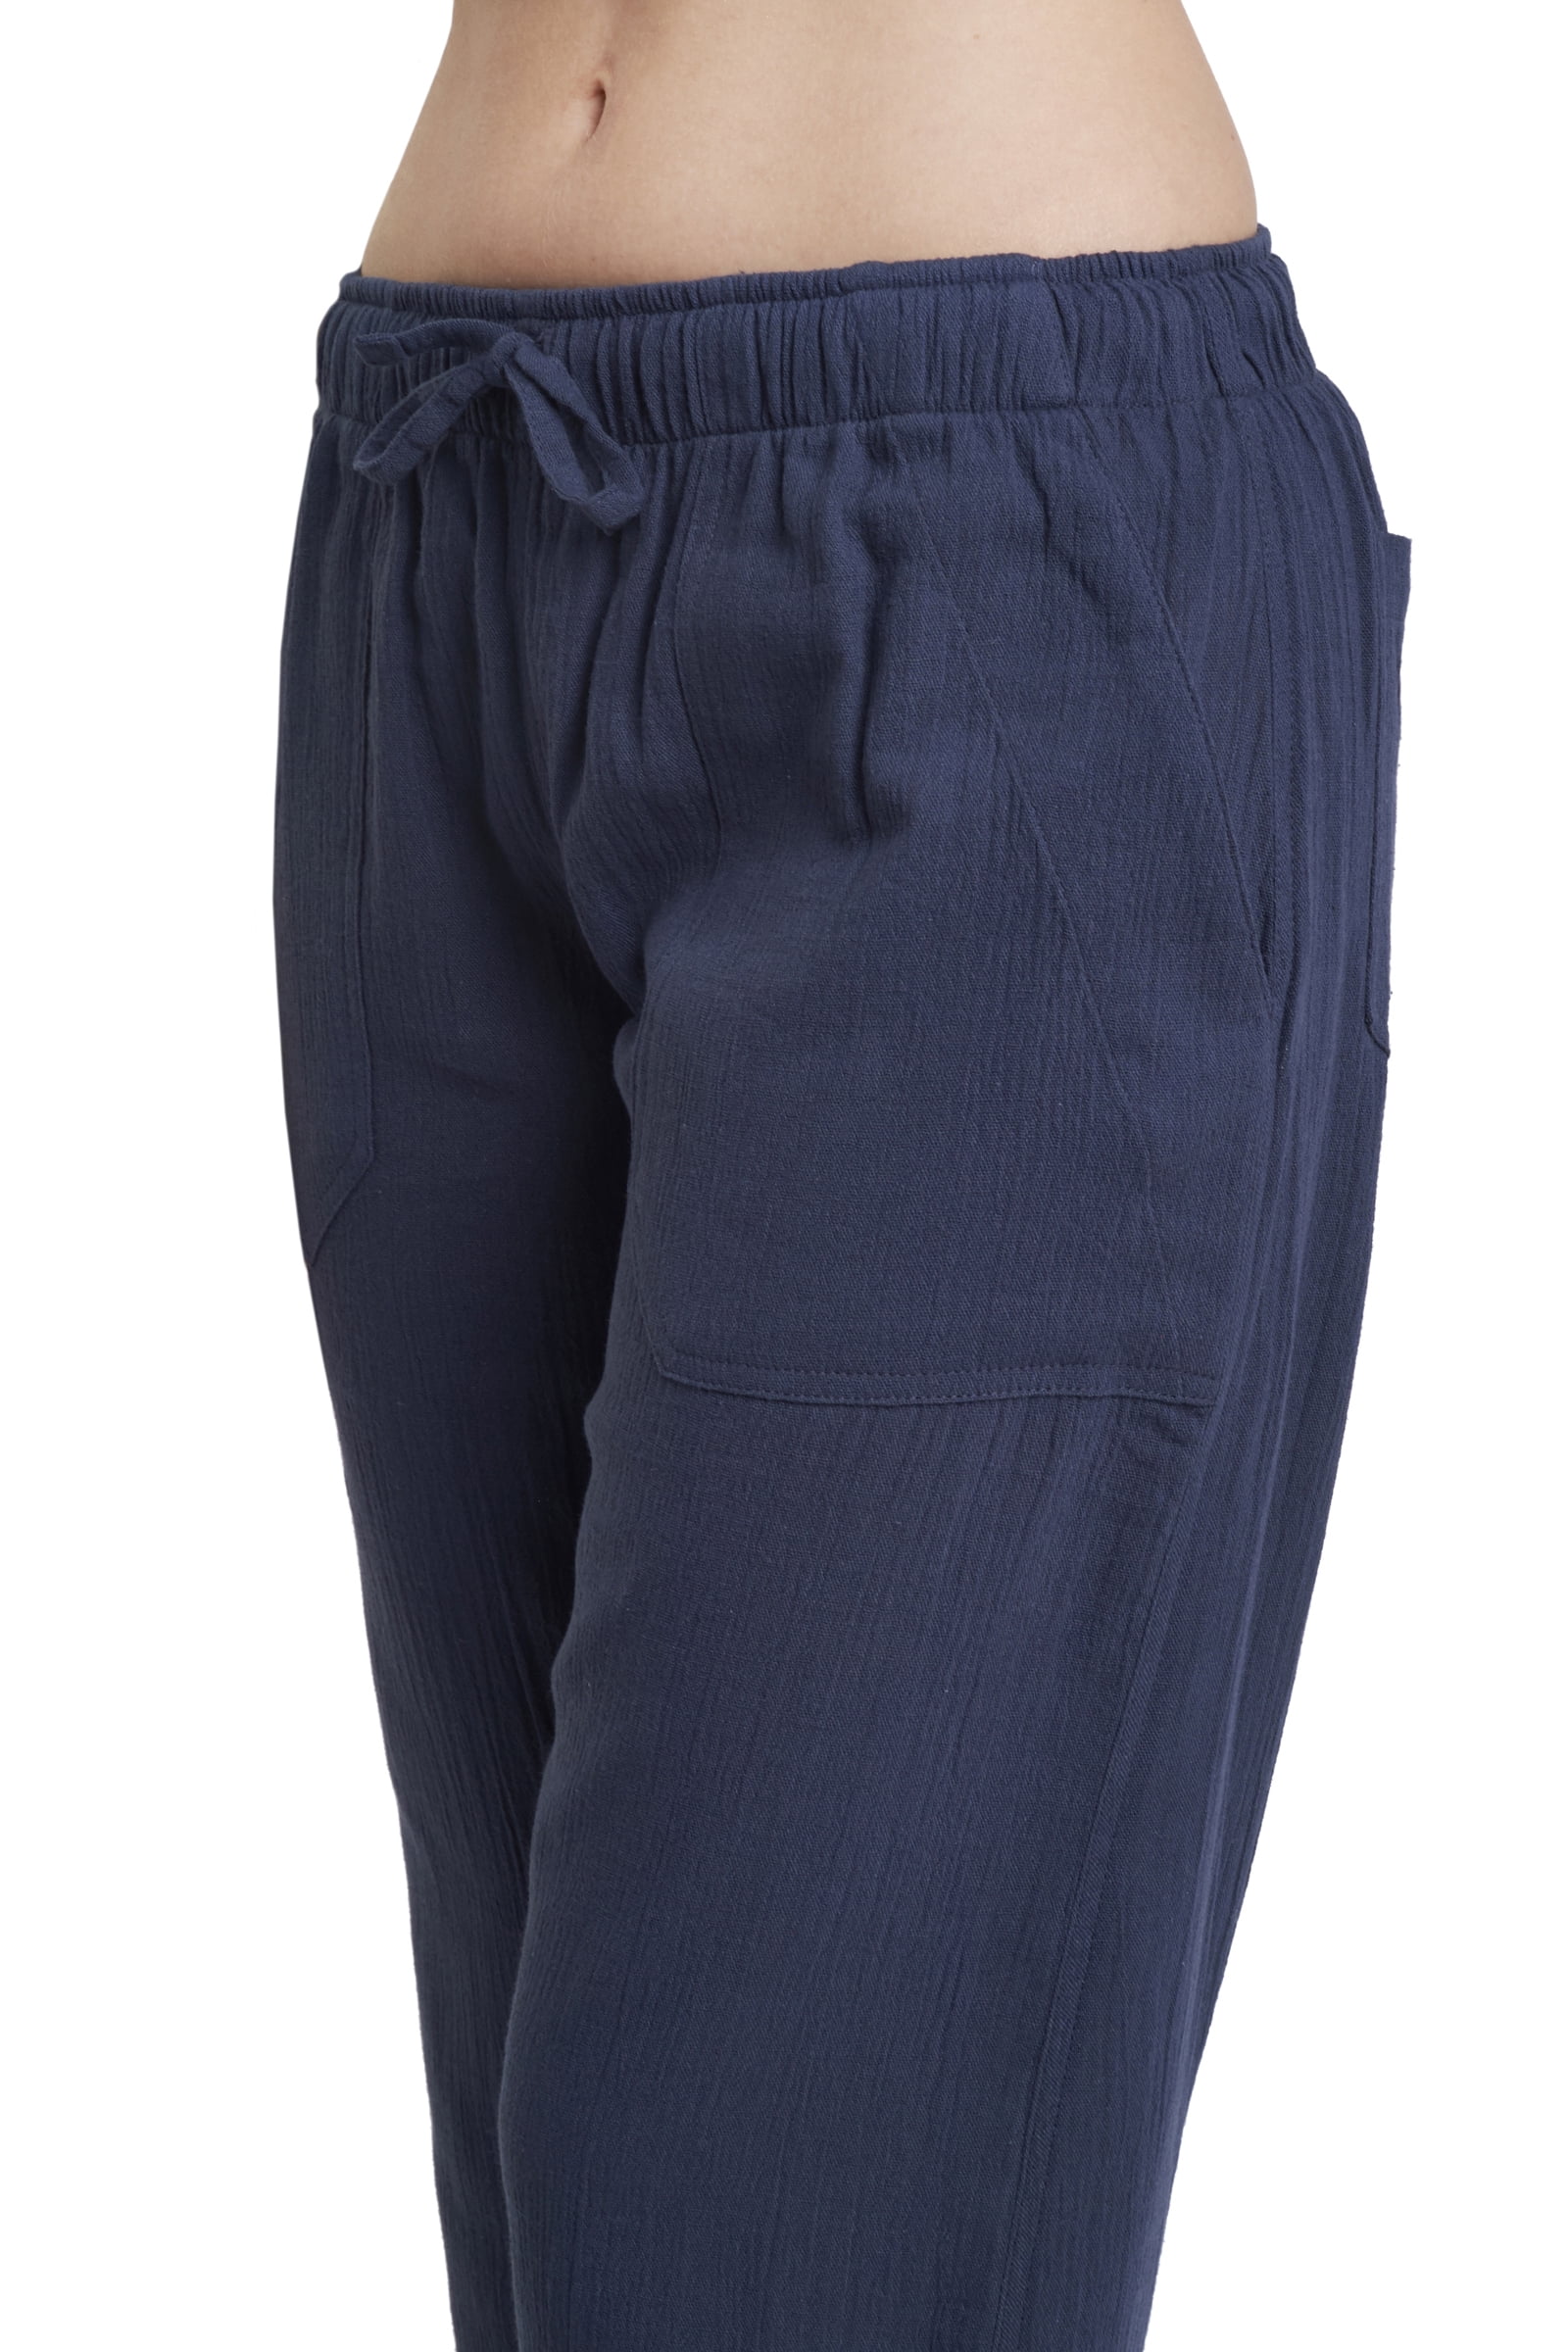 J & Ce Women's 100% Cotton Gauze Beach & Pajama Pants